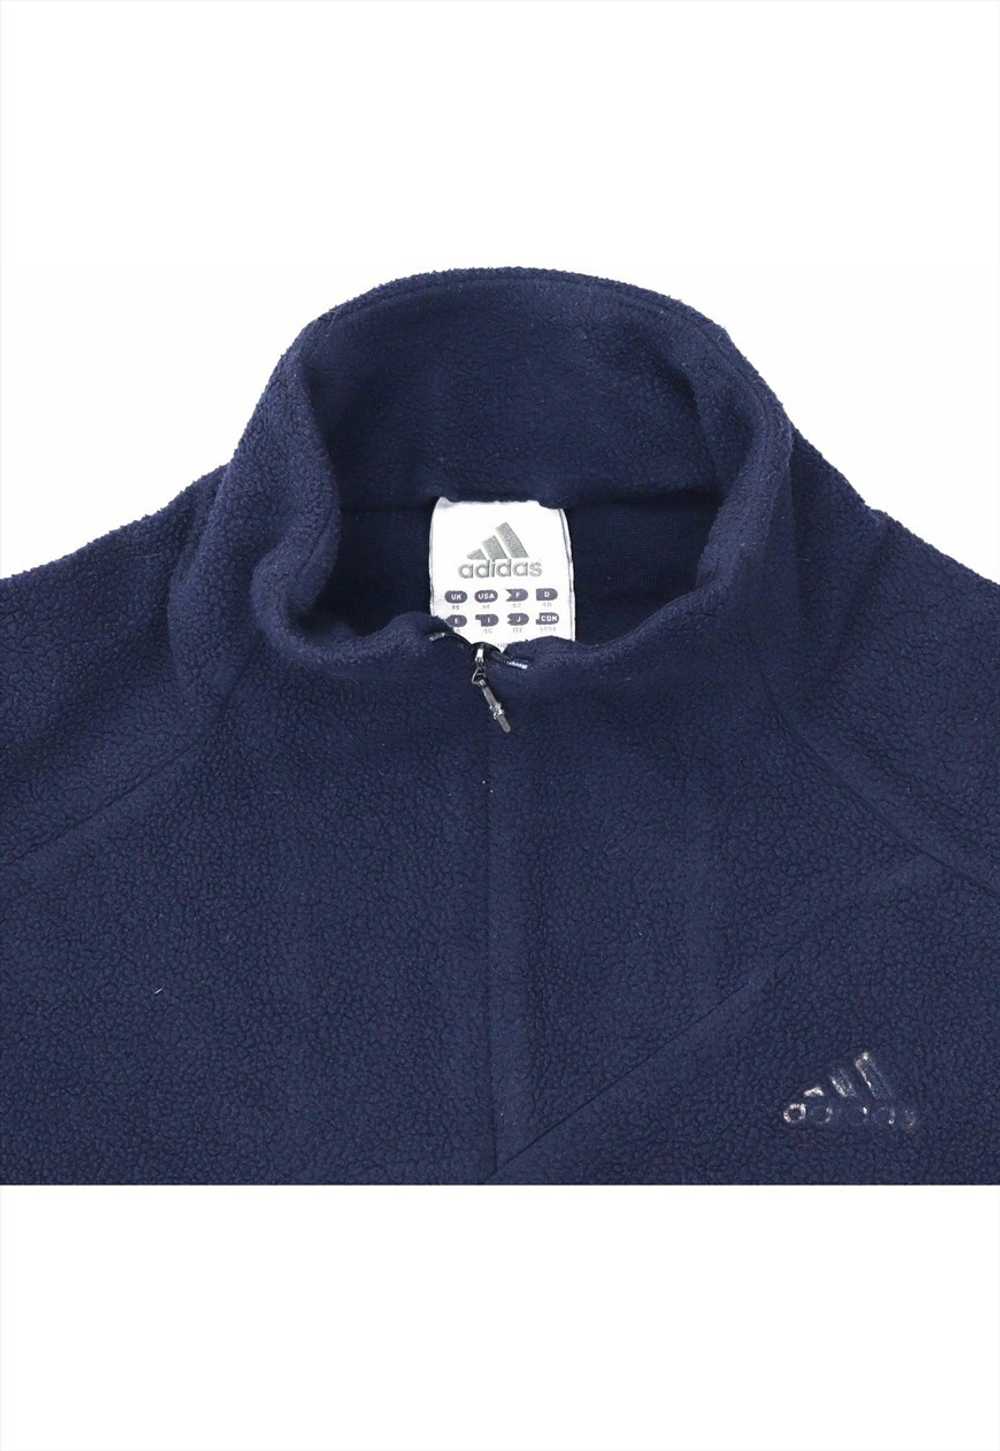 Vintage 90's Adidas Fleece Spellout Quarter Zip - image 3